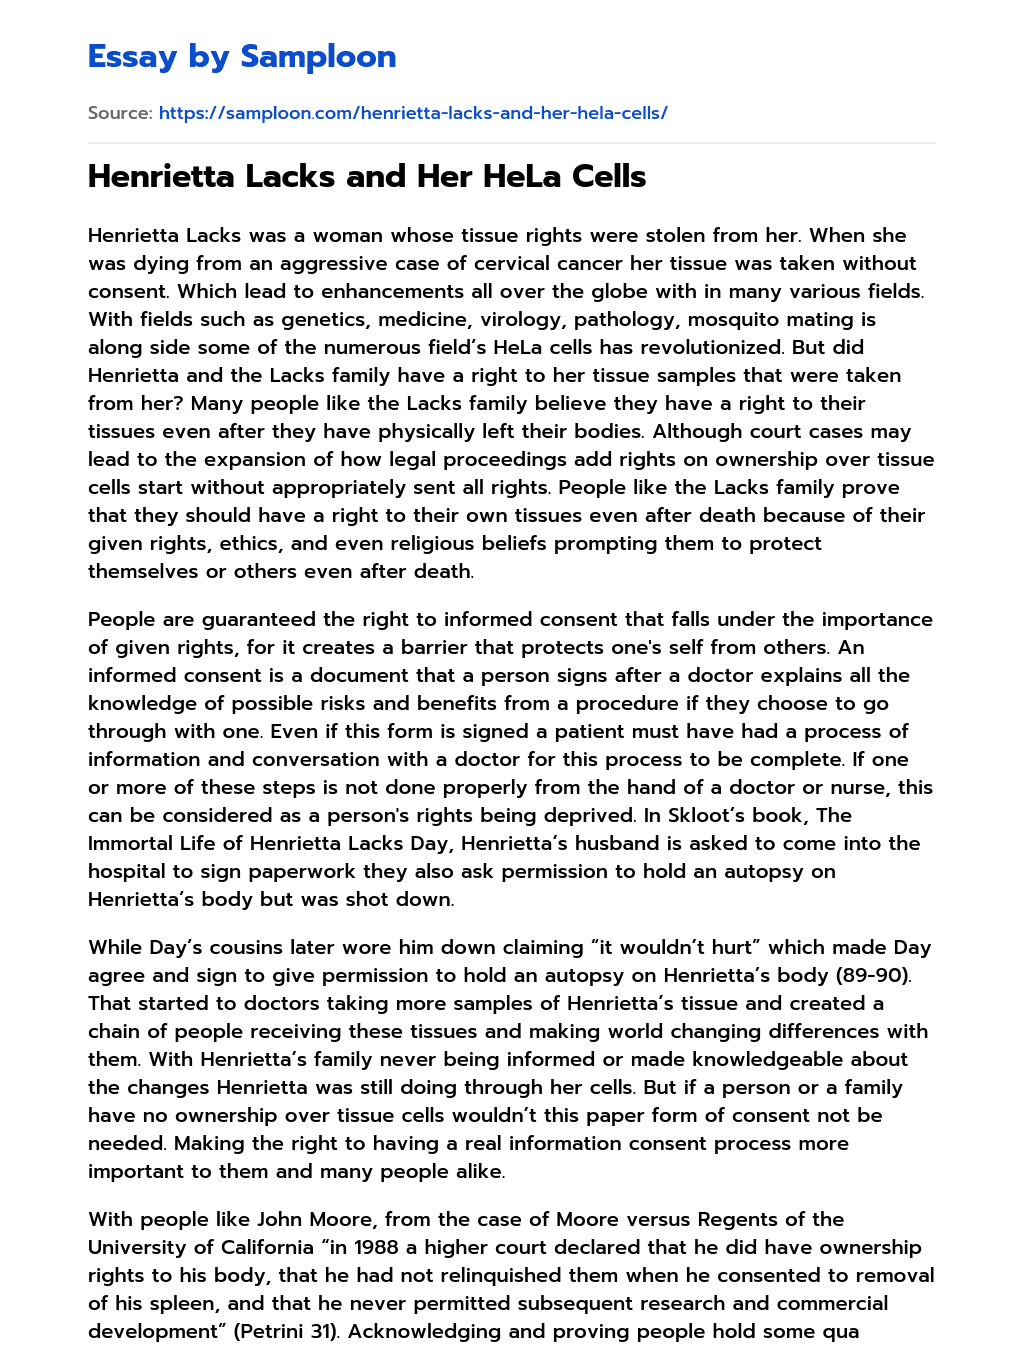 Henrietta Lacks and Her HeLa Cells essay